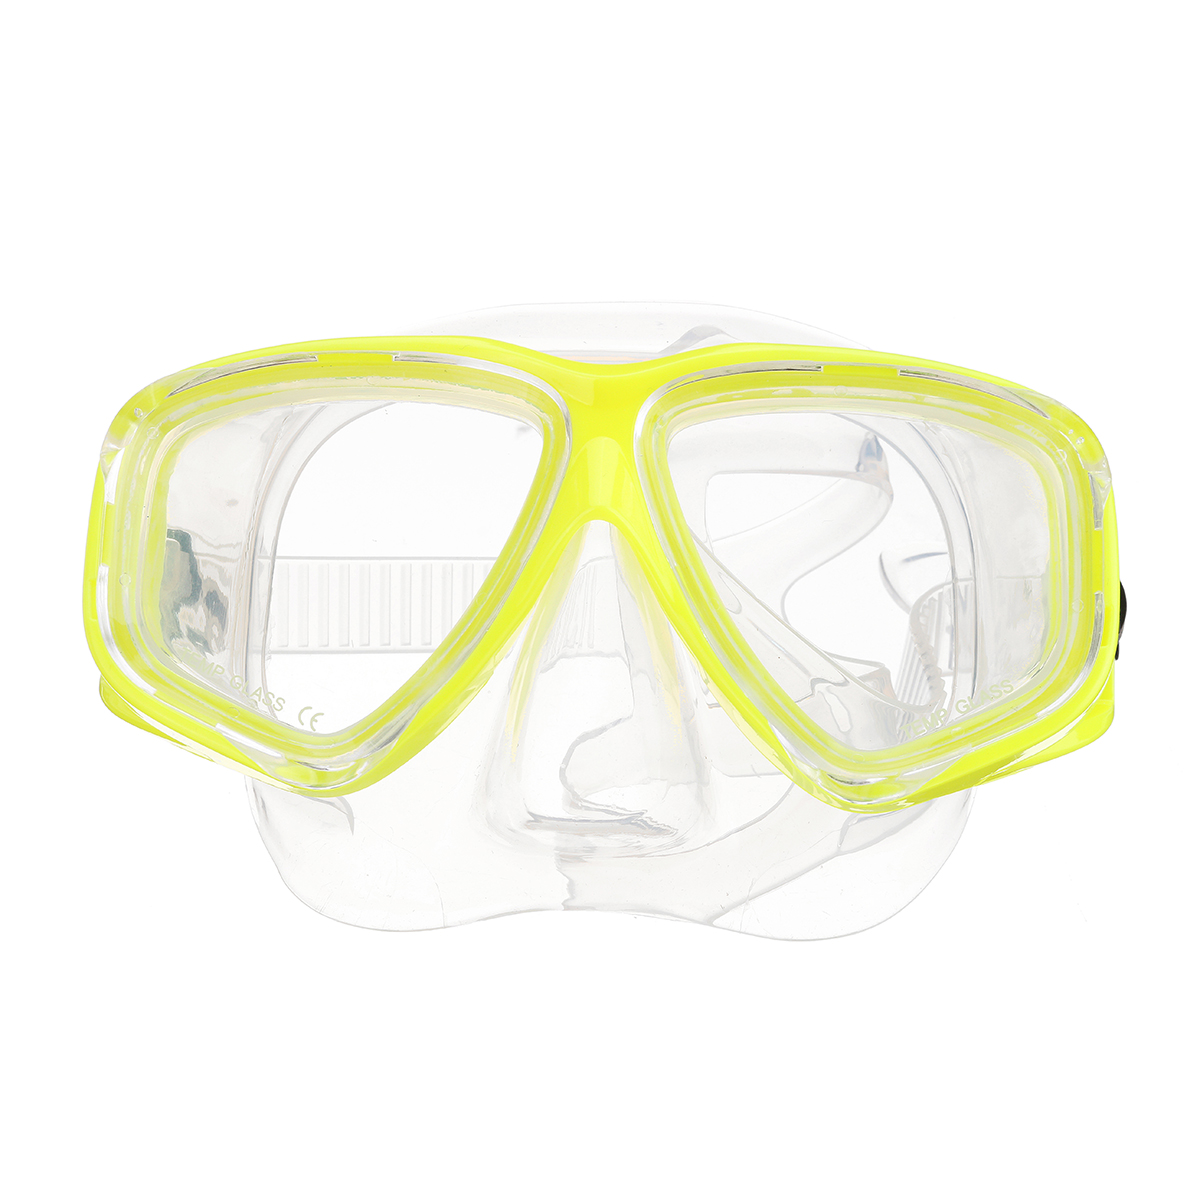 Double-Suit-Smaco-Diving-Mini-Scuba-Cylinder-Oxygen-Respirator-Tank-Underwater-Breath-Set-1573807